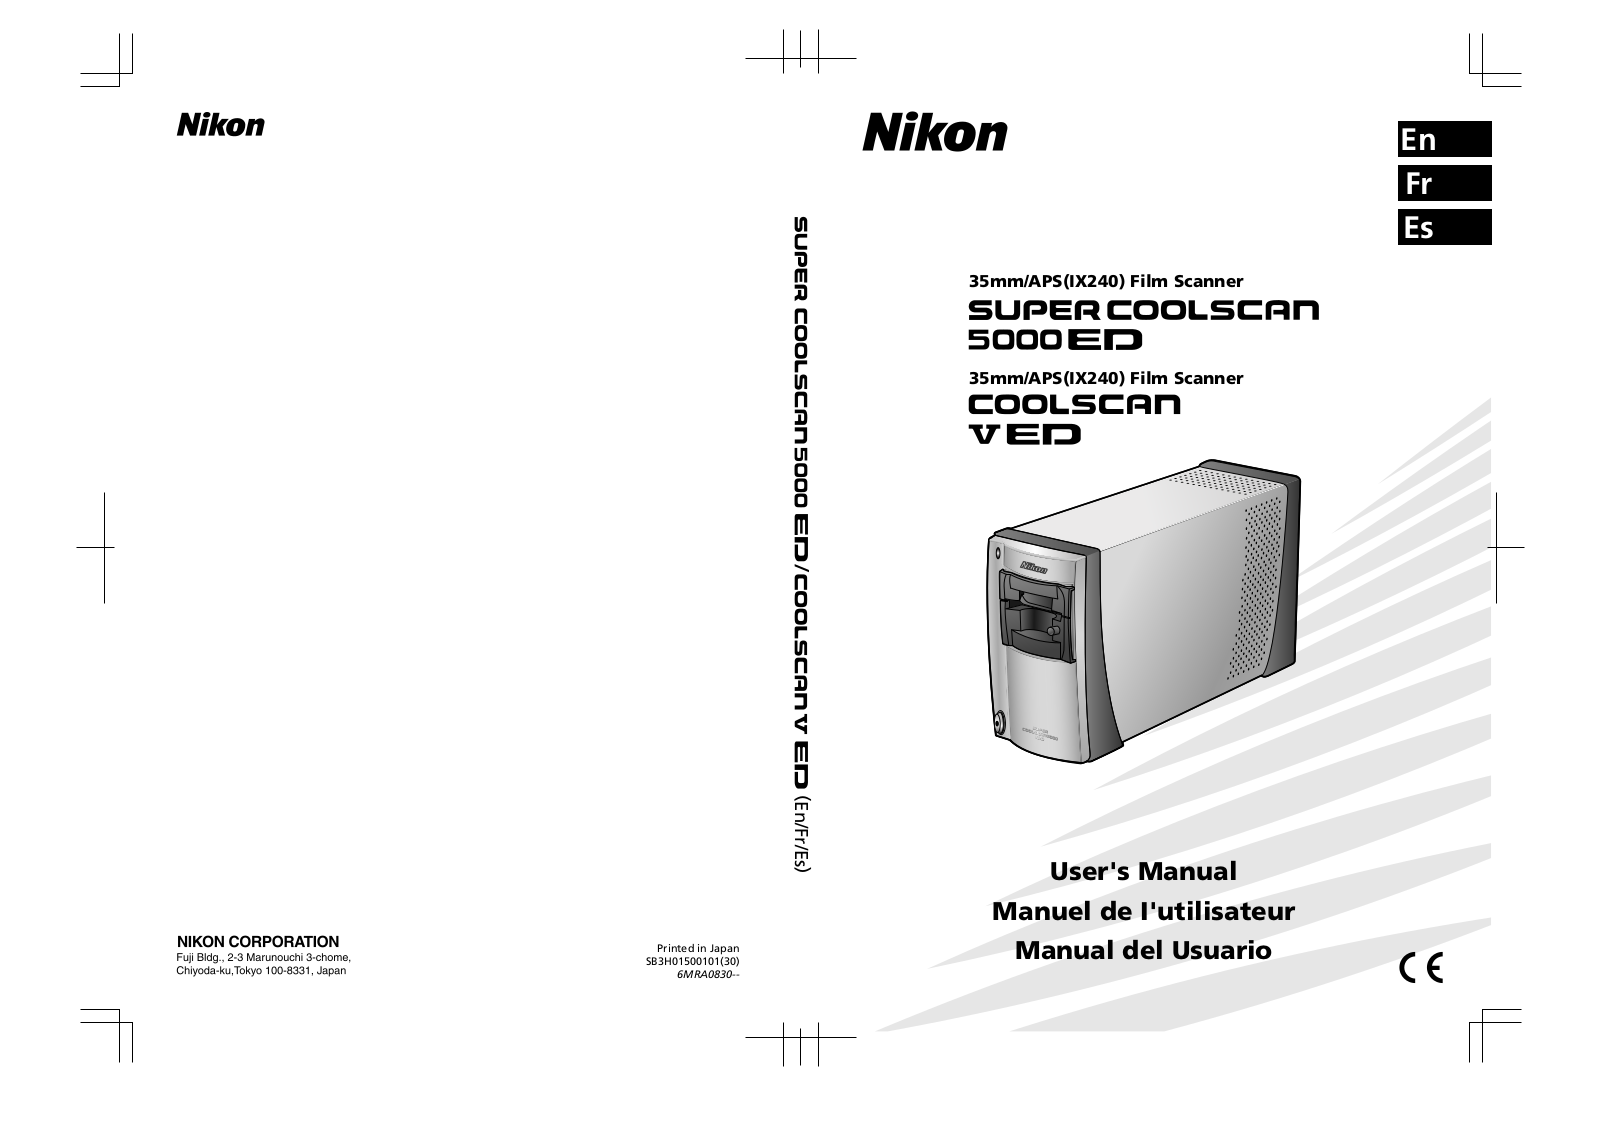 NIKON Super Coolscan 5000 ED User Manual